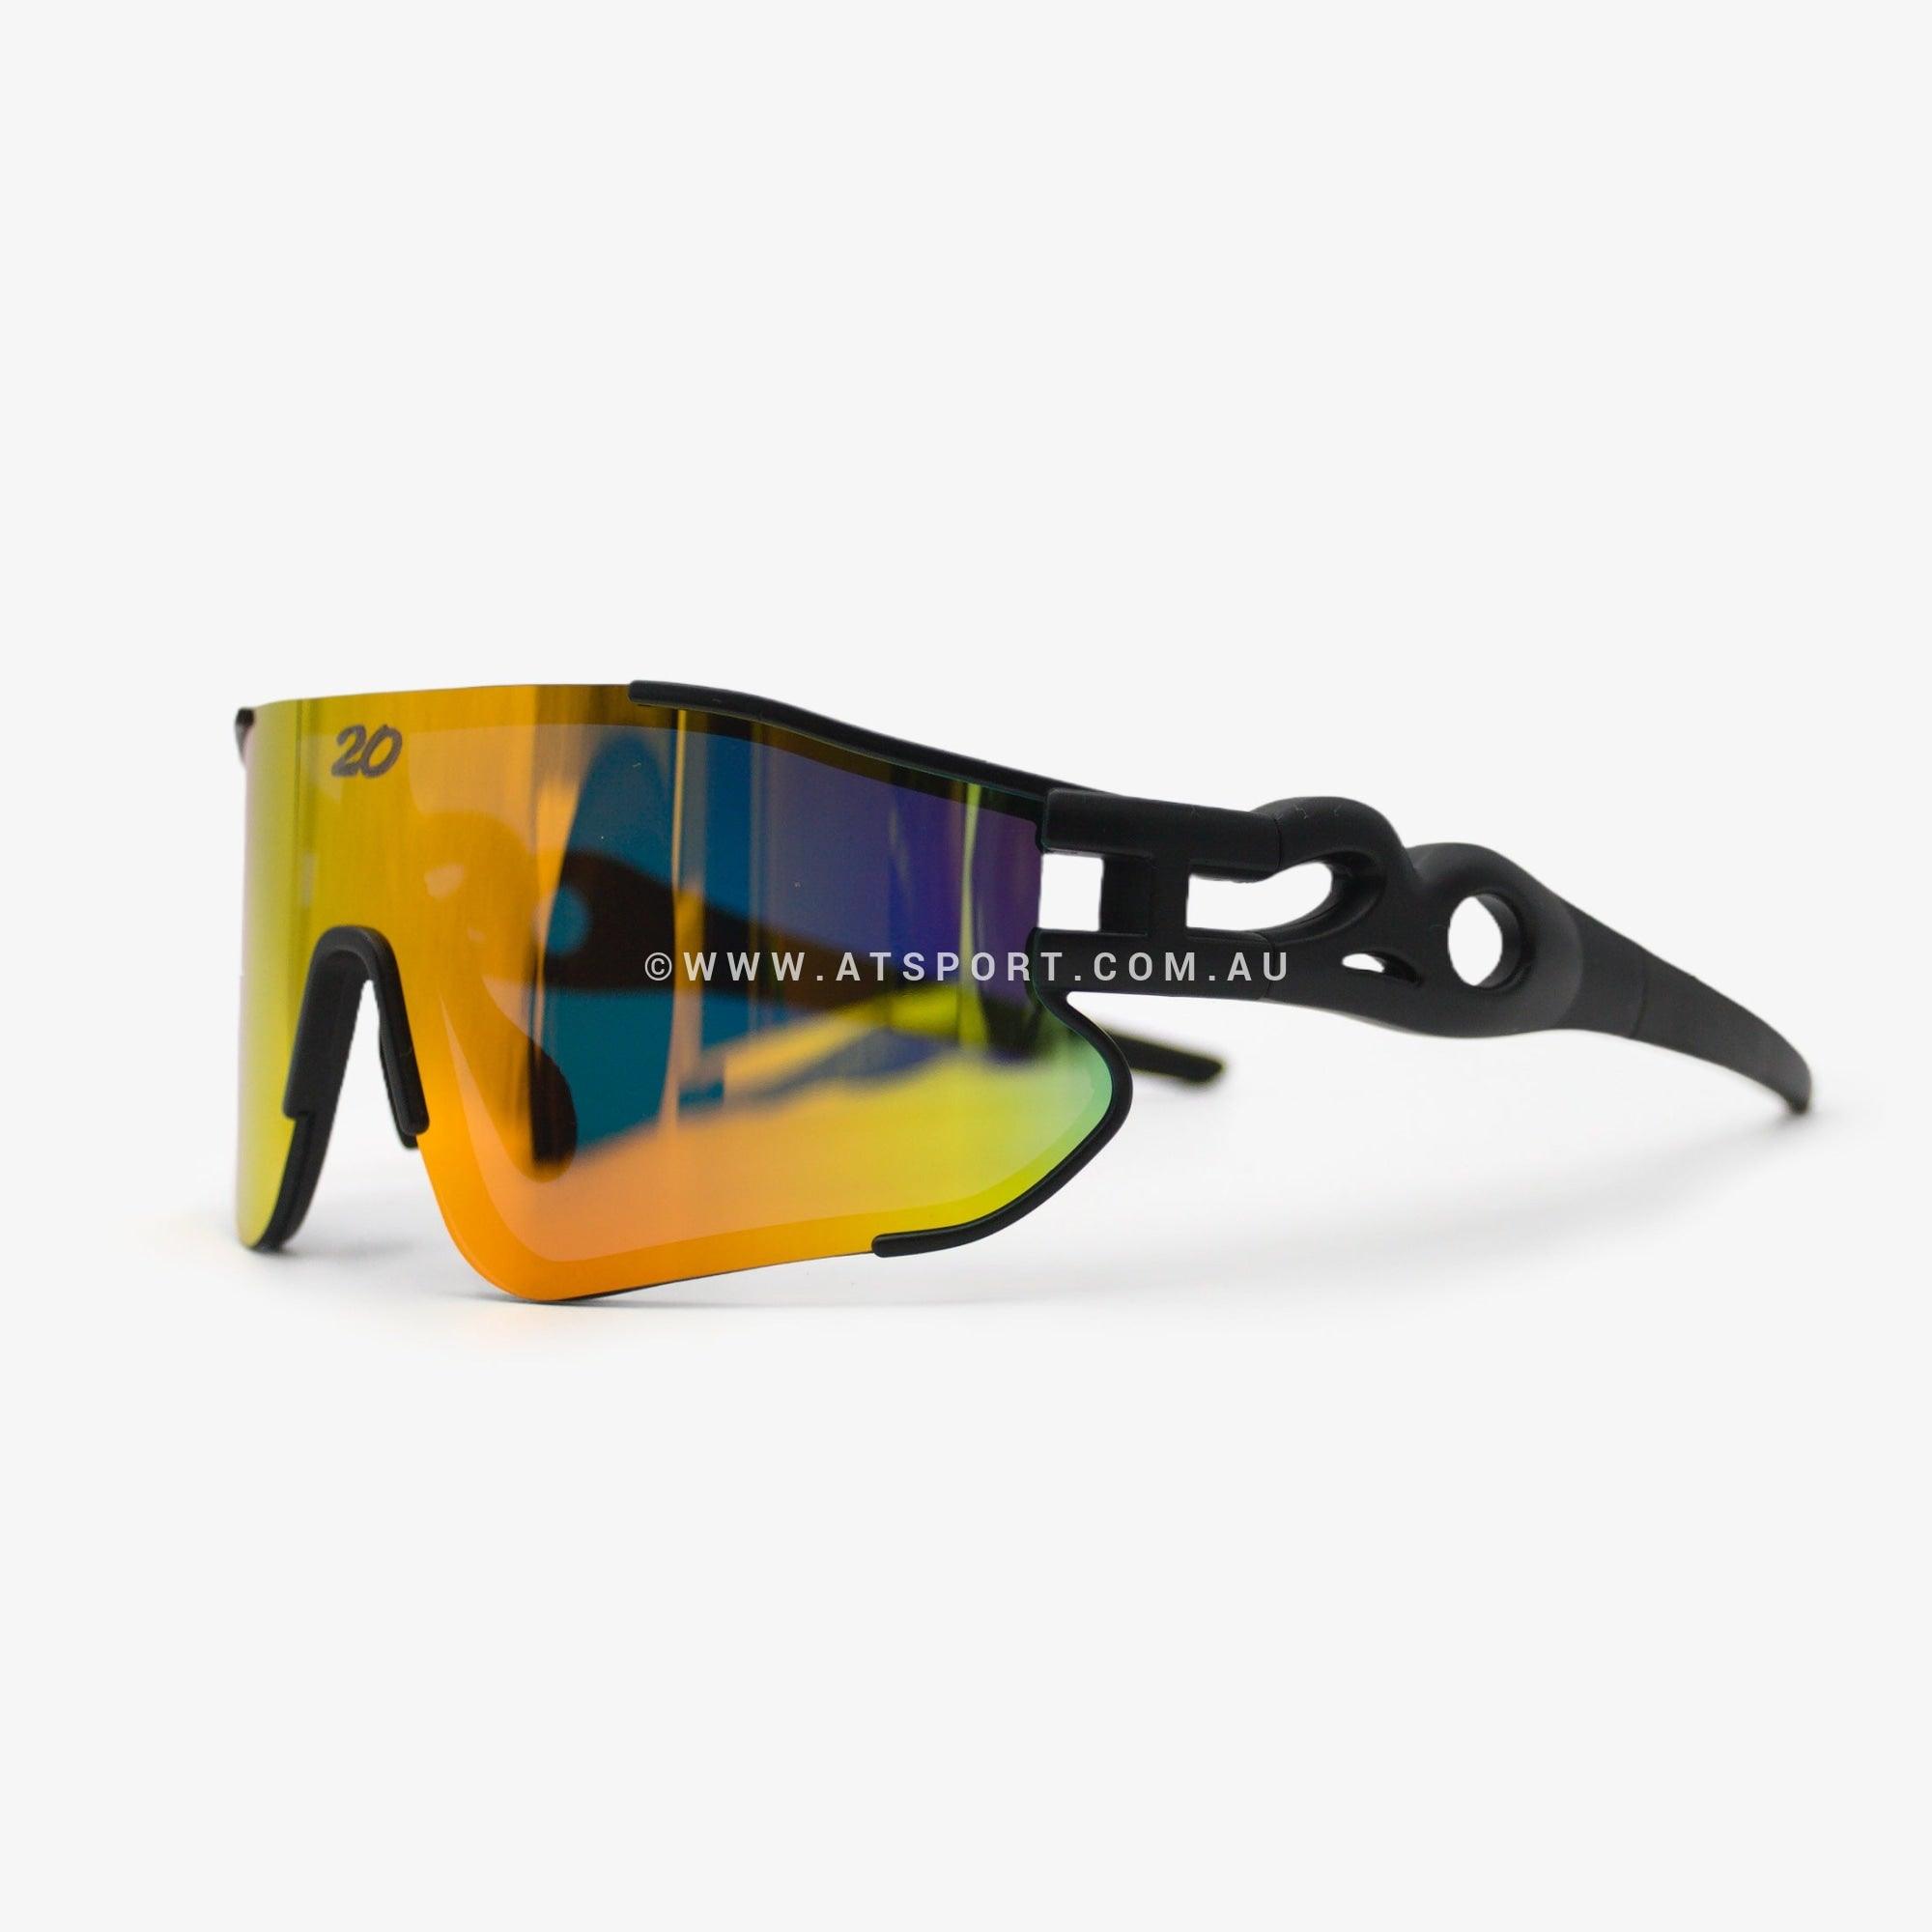 Twenty20 Vision T20 All-Rounder Cricket Sunglasses - AT Sports